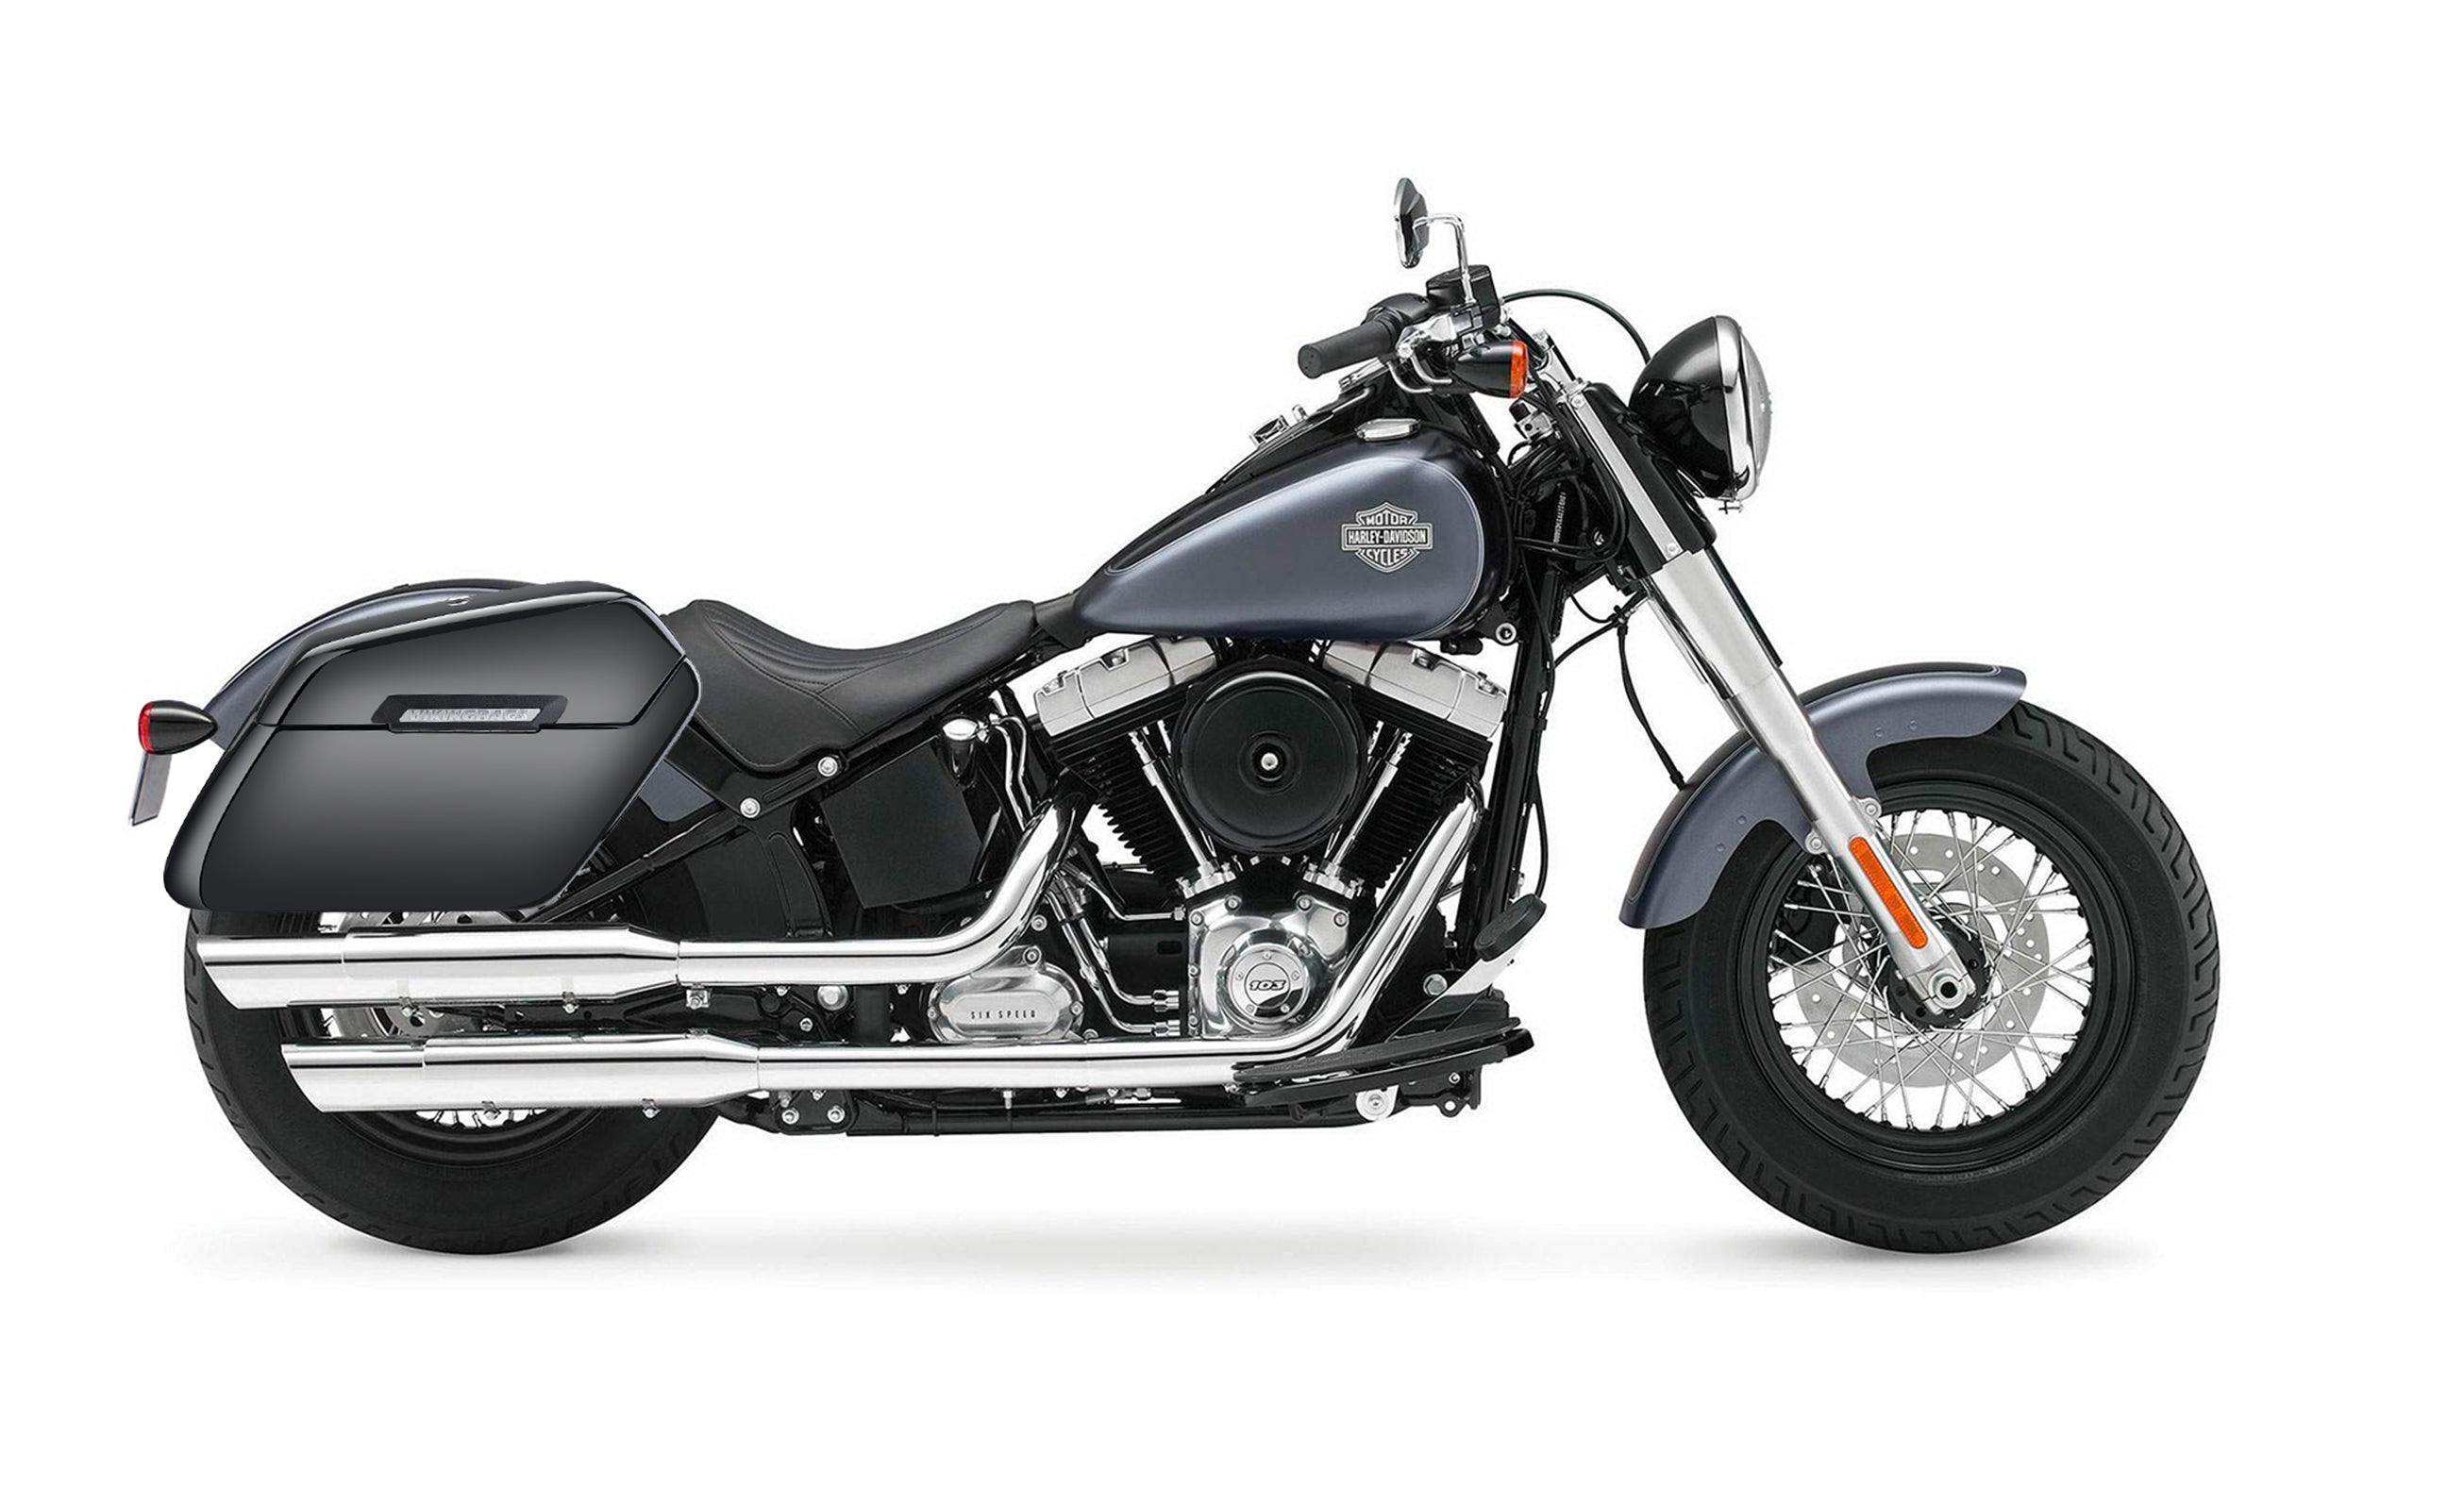 42L - Baldur XL Painted Motorcycle Hard Saddlebags for Harley Softail Slim FLS on Bike Photo @expand